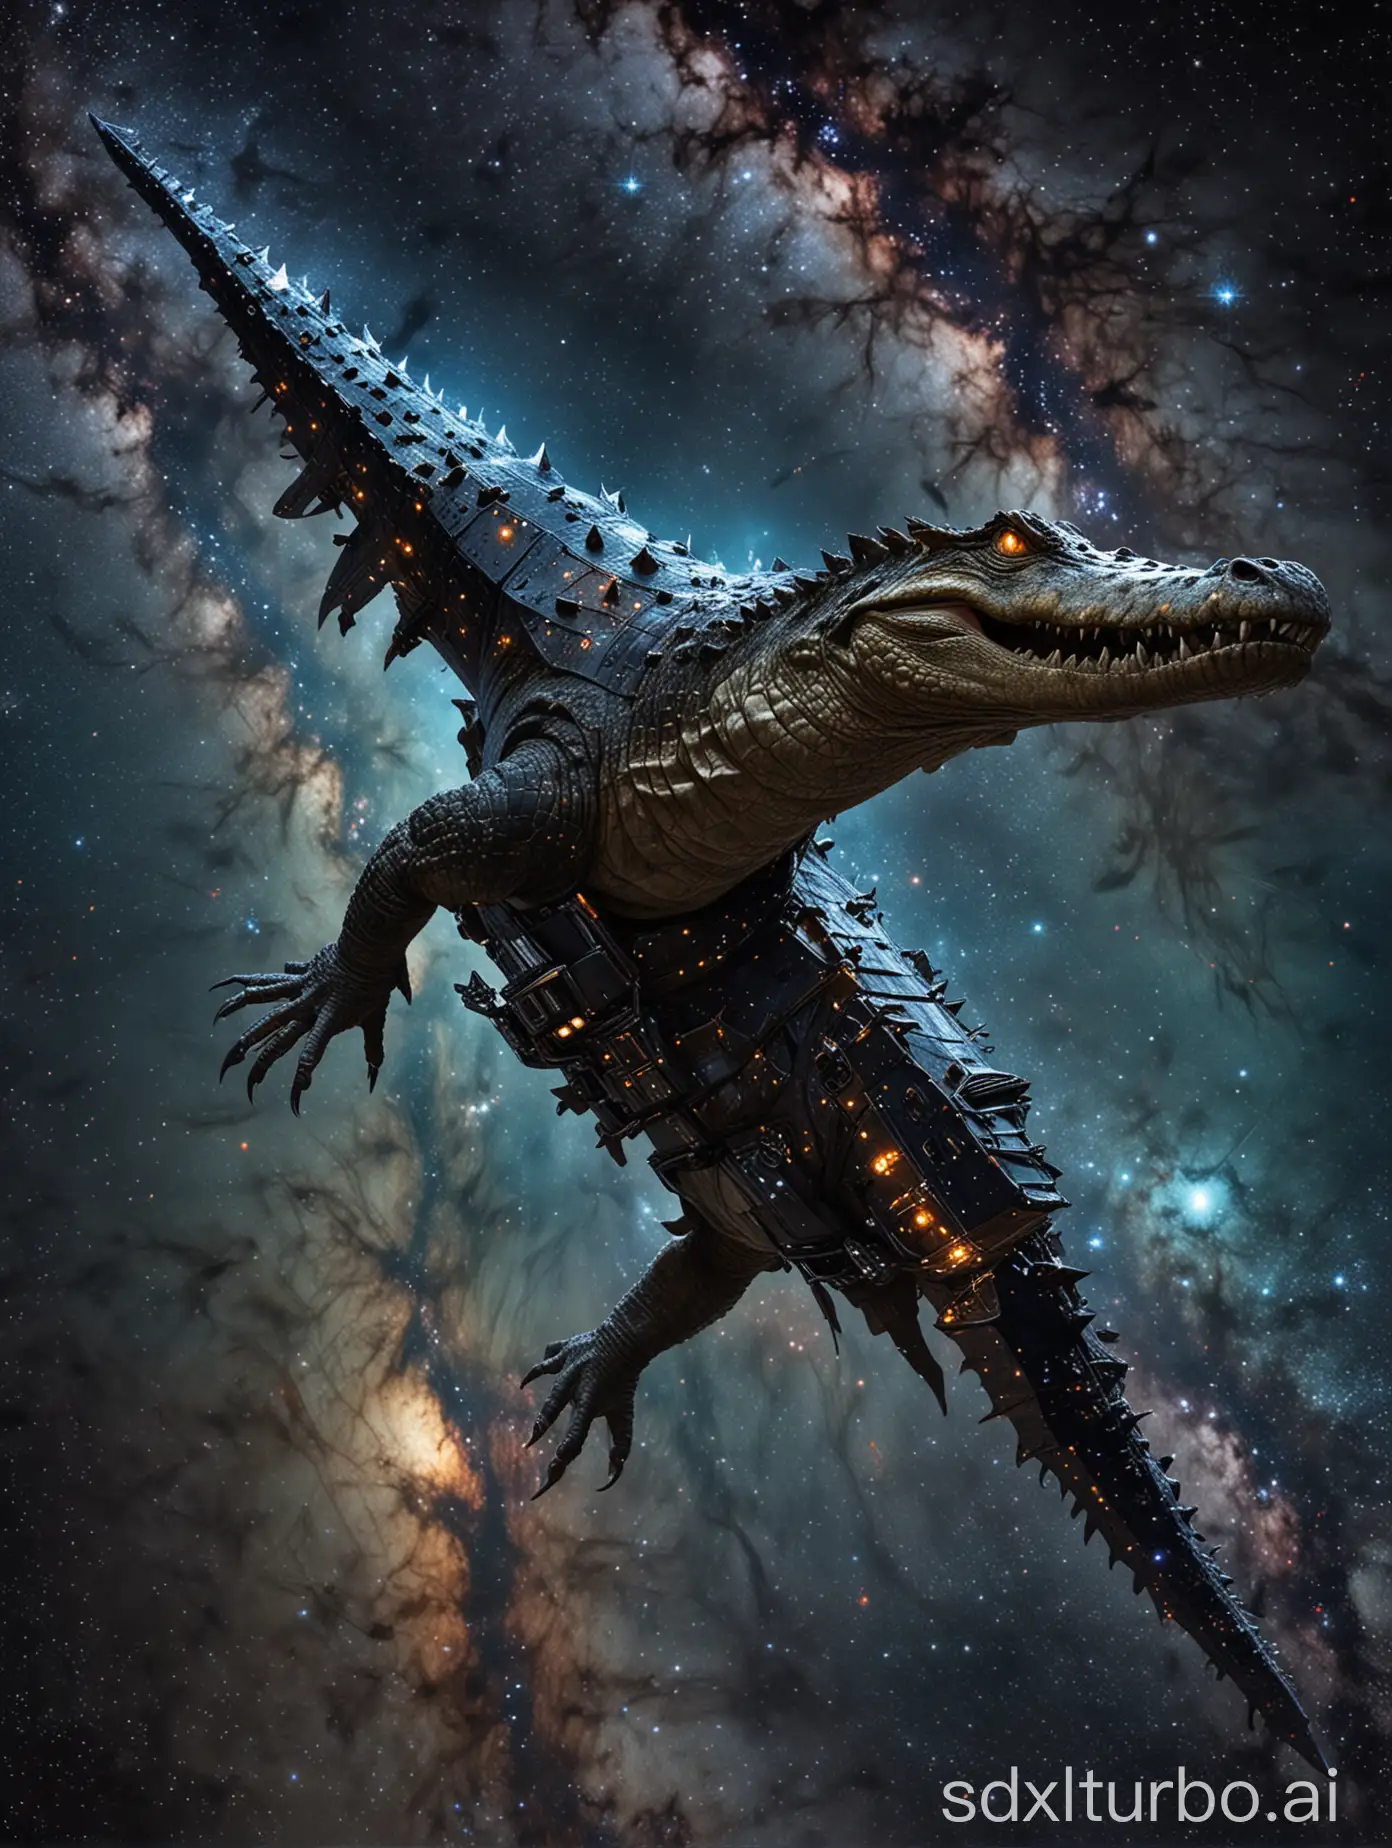 Galactic-Starlight-Crocodile-Space-Pirates-Cosmic-Mount